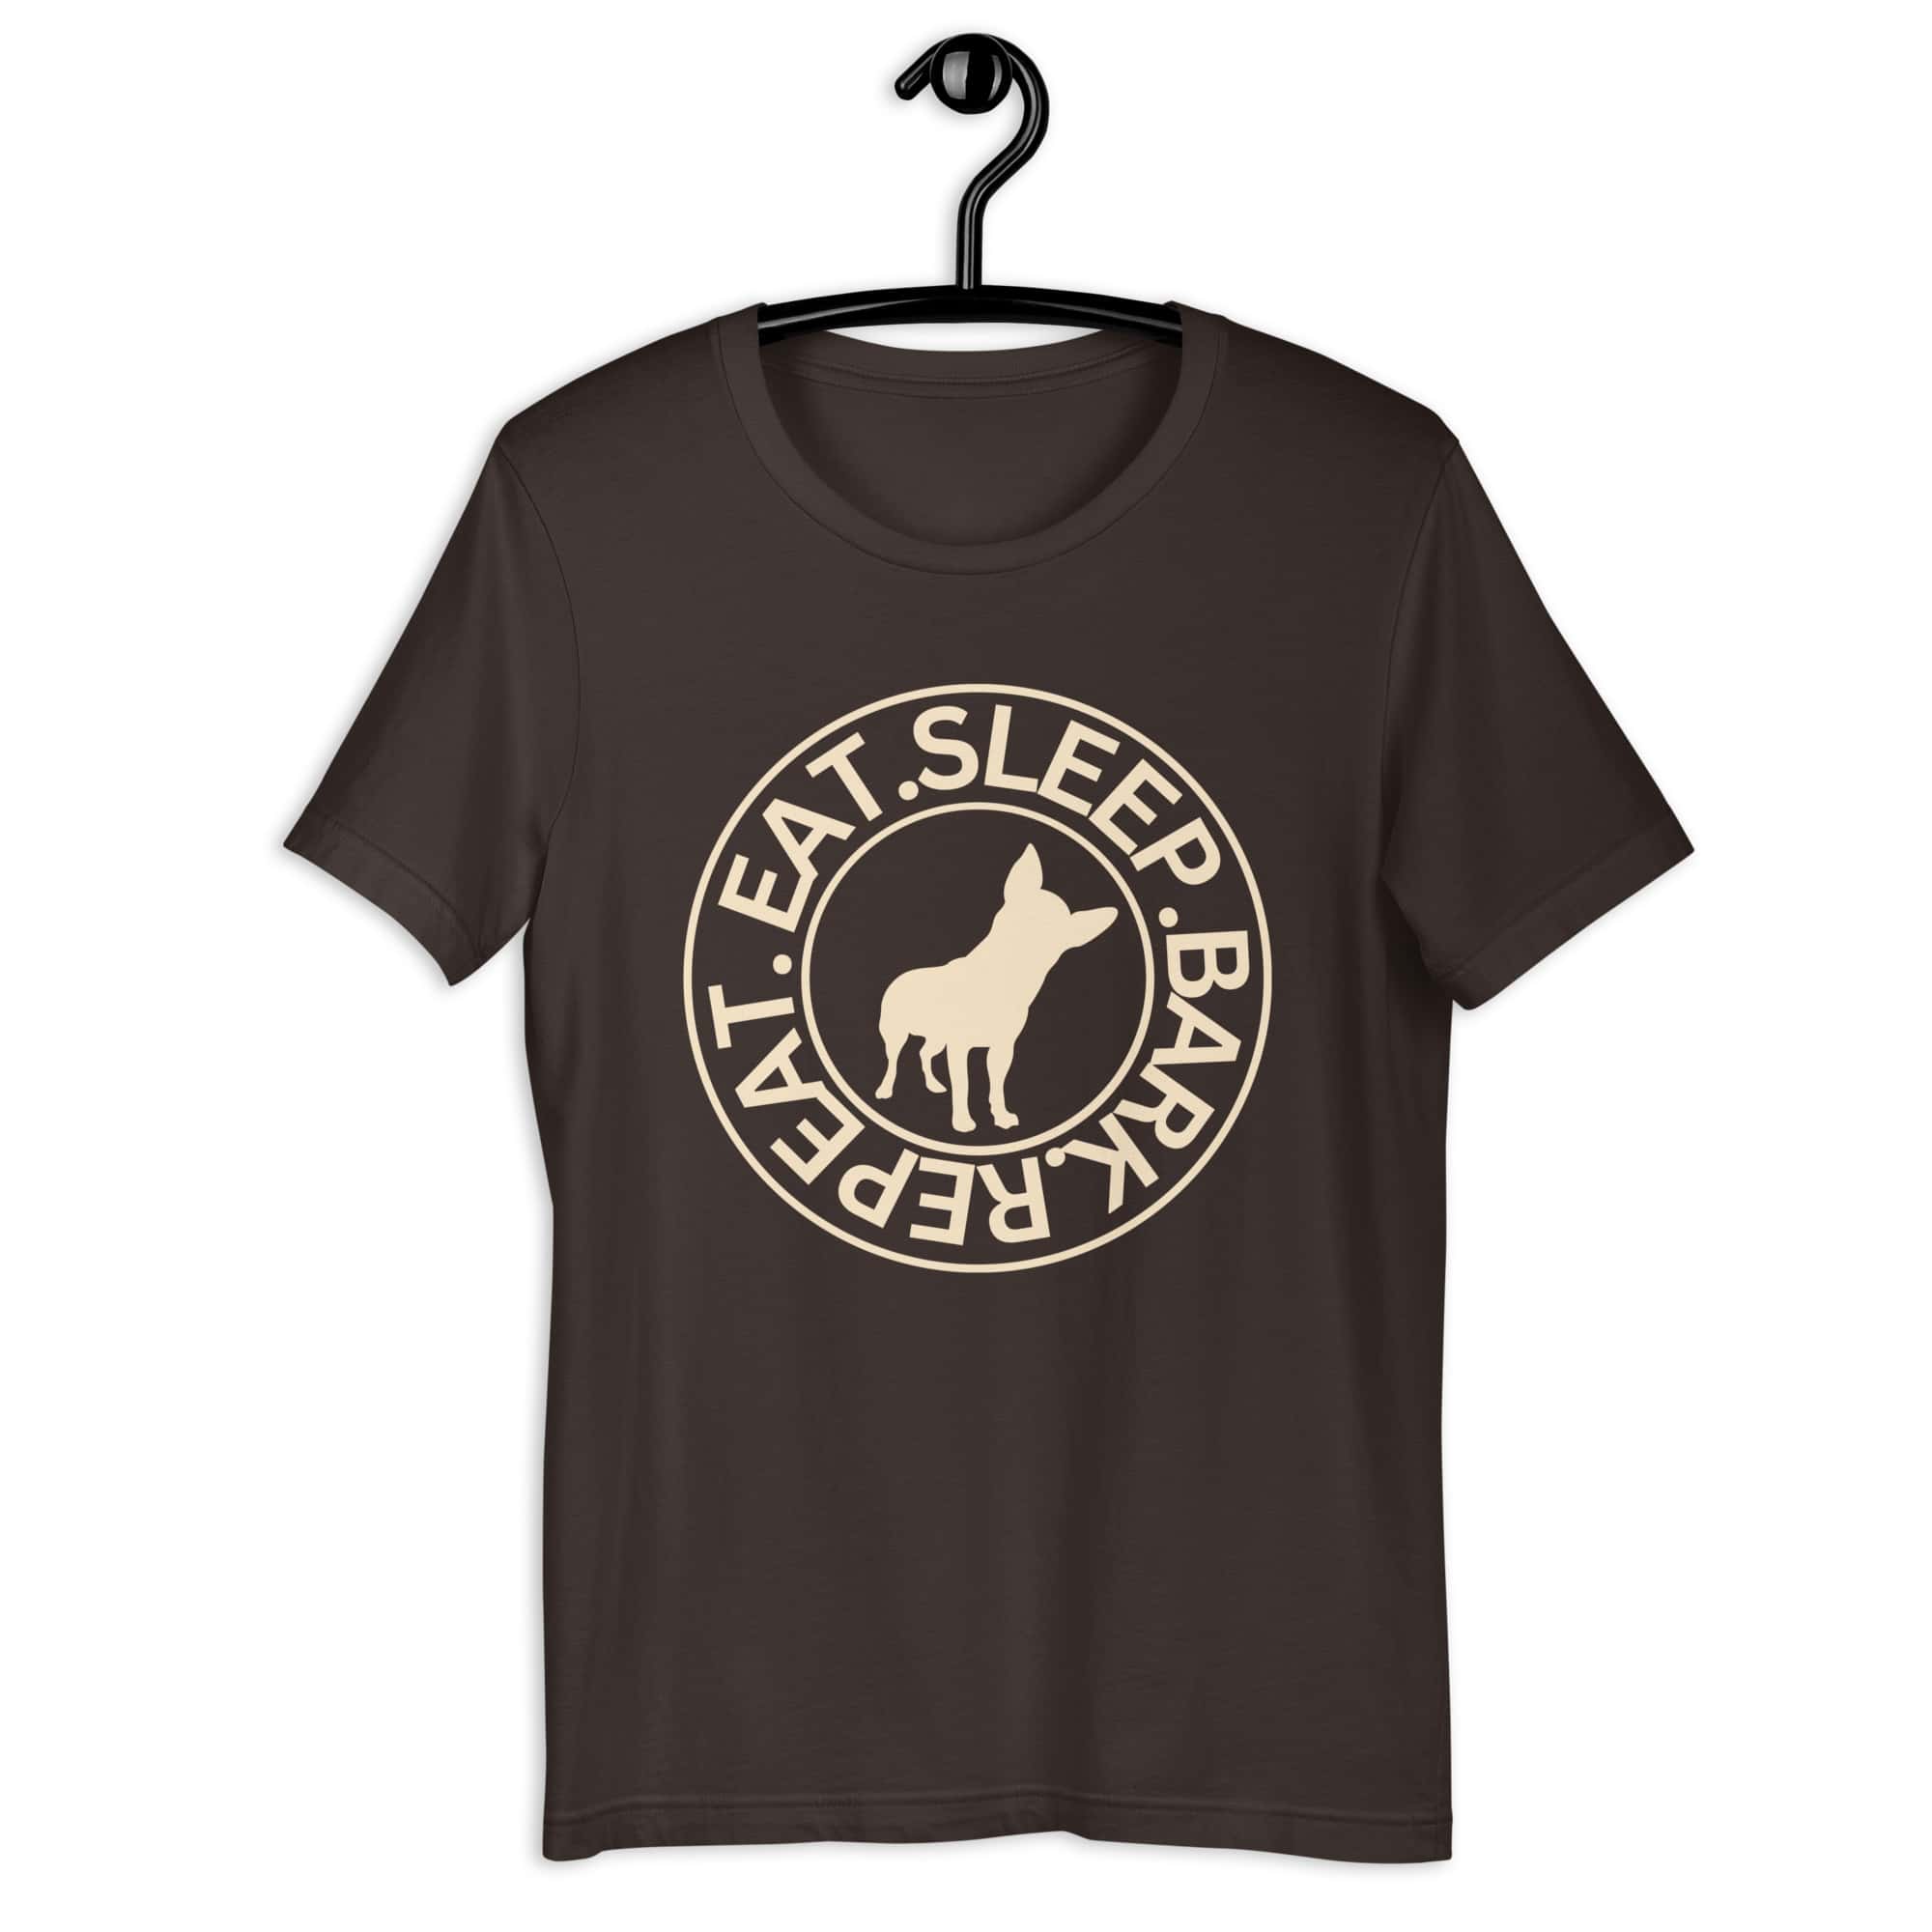 Eat Sleep Bark Repeat Toy Manchester Terrier Unisex T-Shirt. Brown